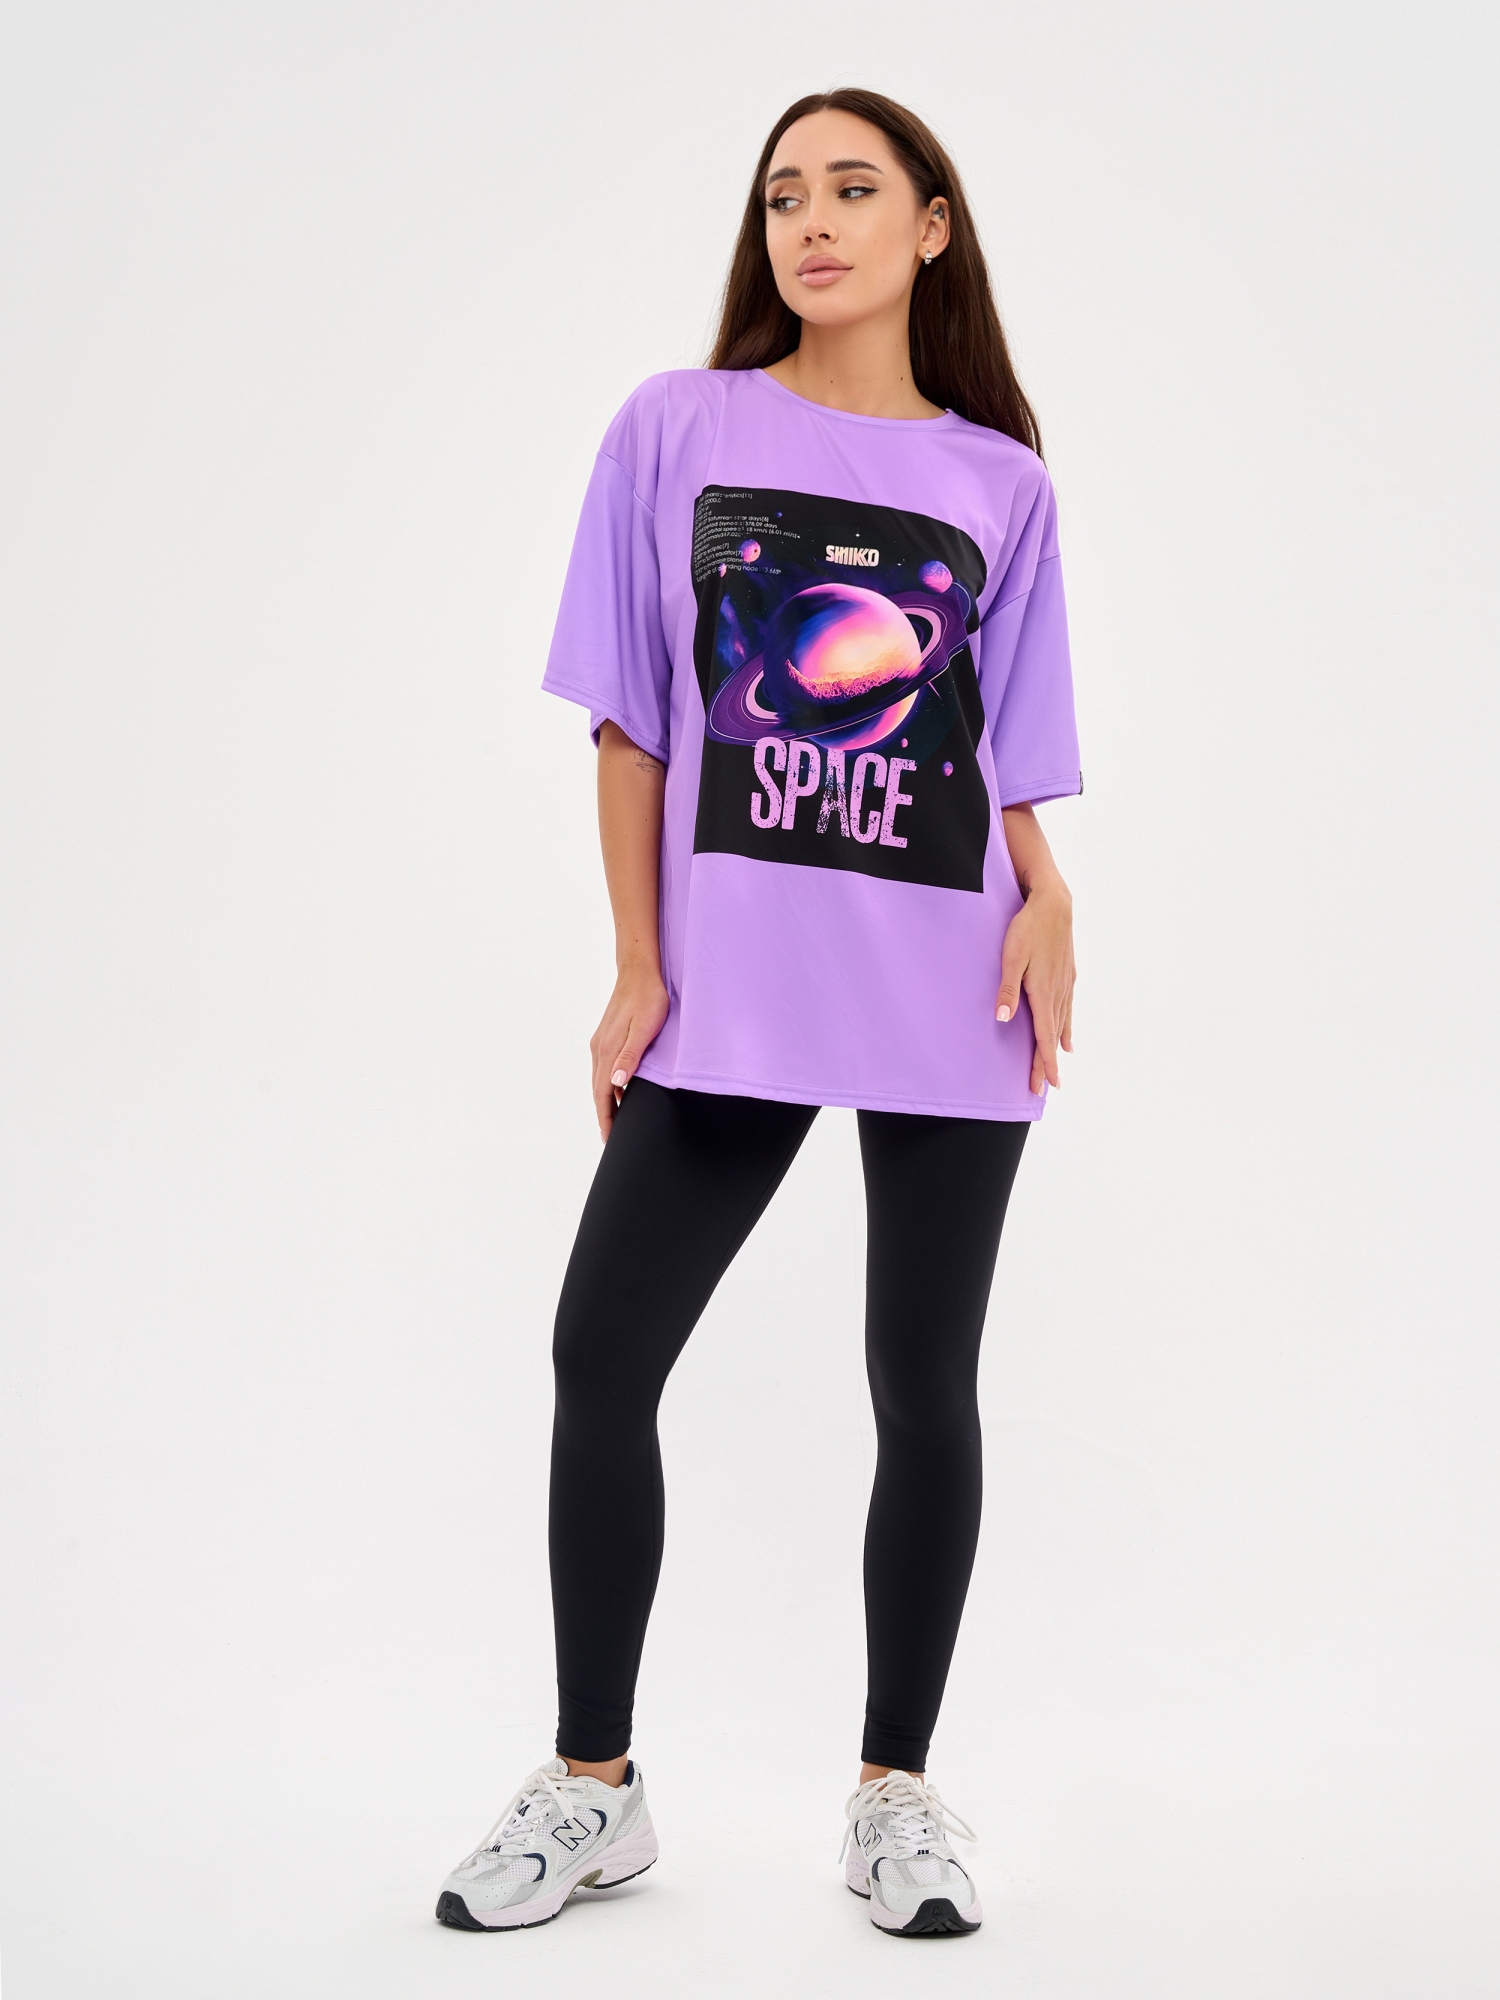 Bona Fashion: OVERSIZE T-shirt "Saturn" фото 10